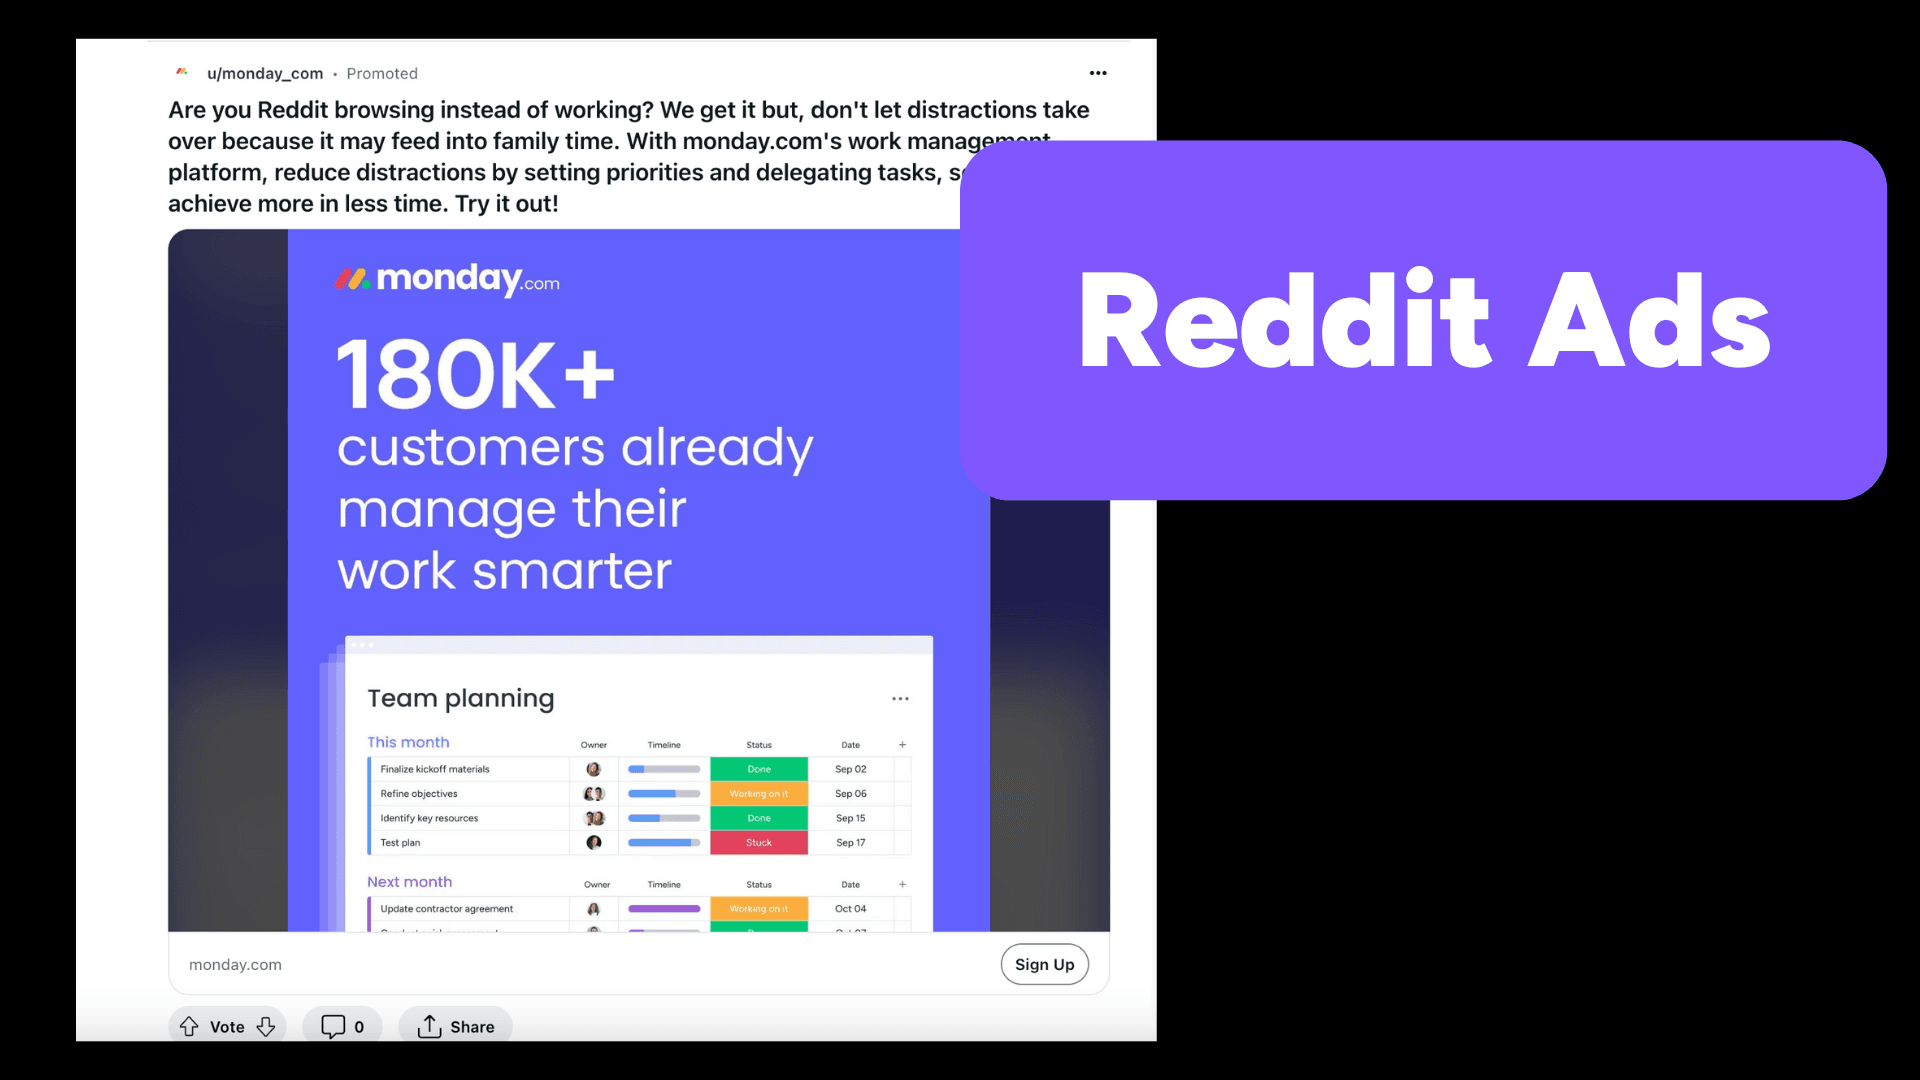 Reddit as platform